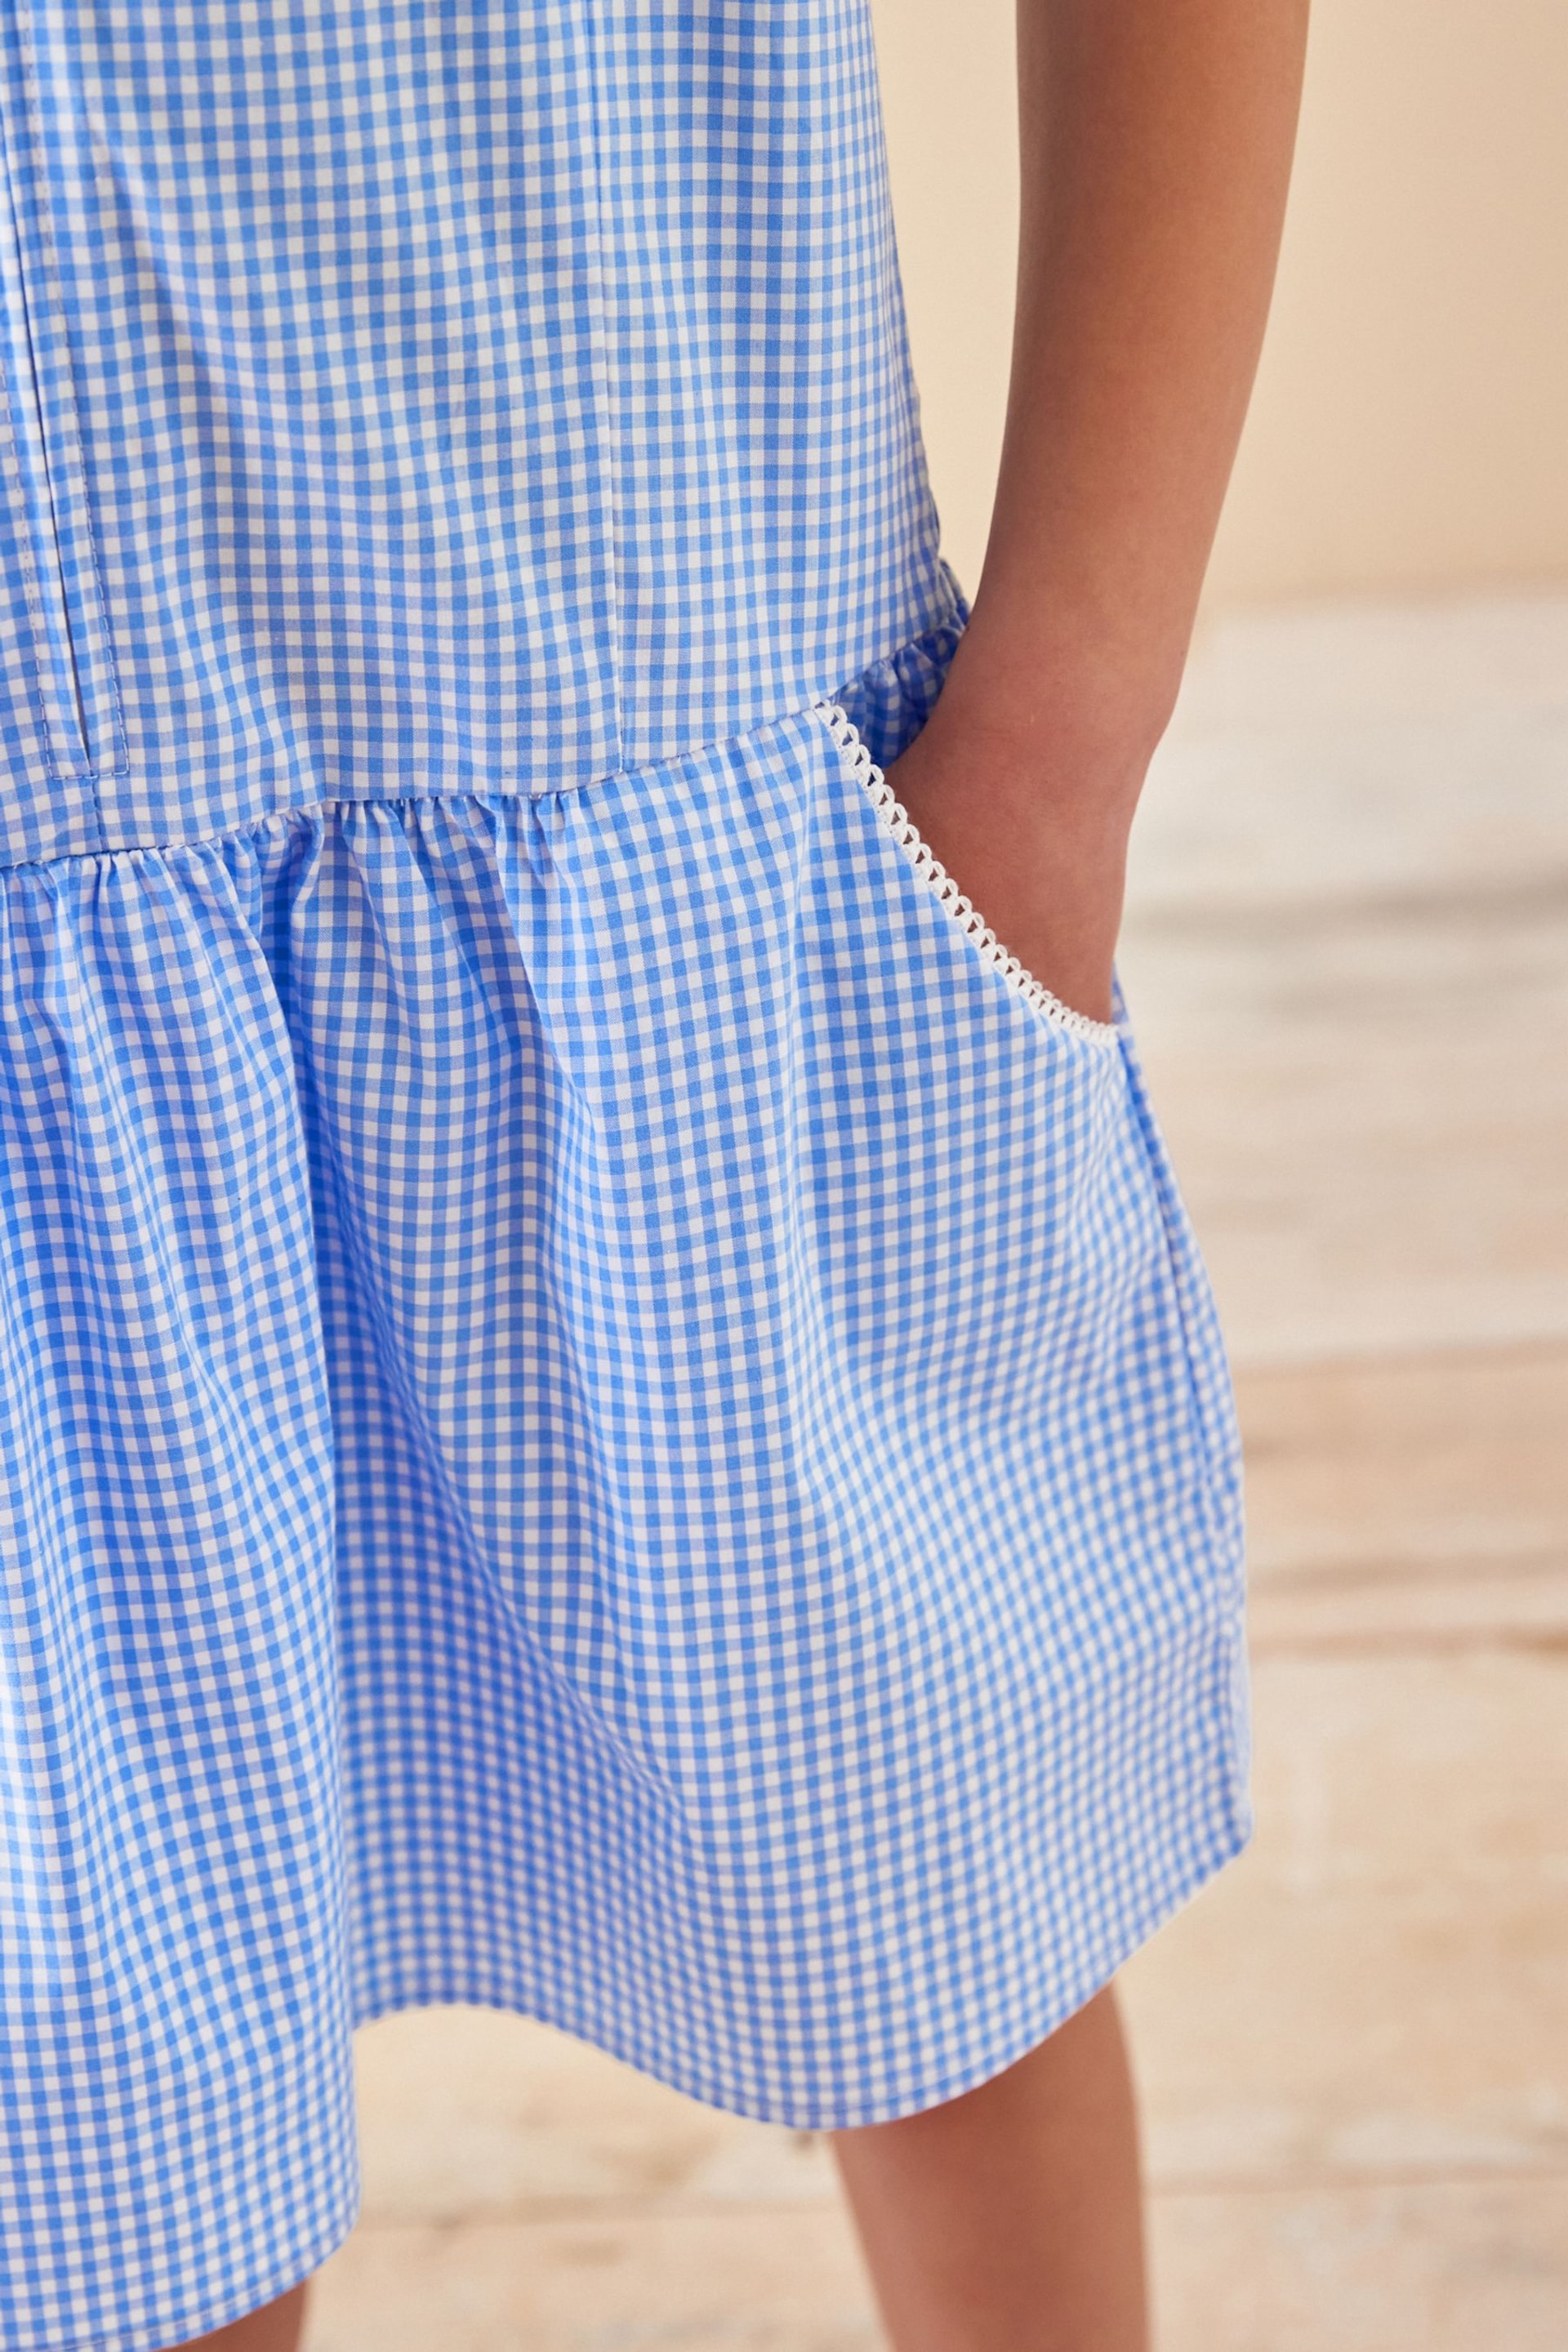 Blue Cotton Rich School Gingham Zip Dress (3-14yrs) - Image 4 of 8